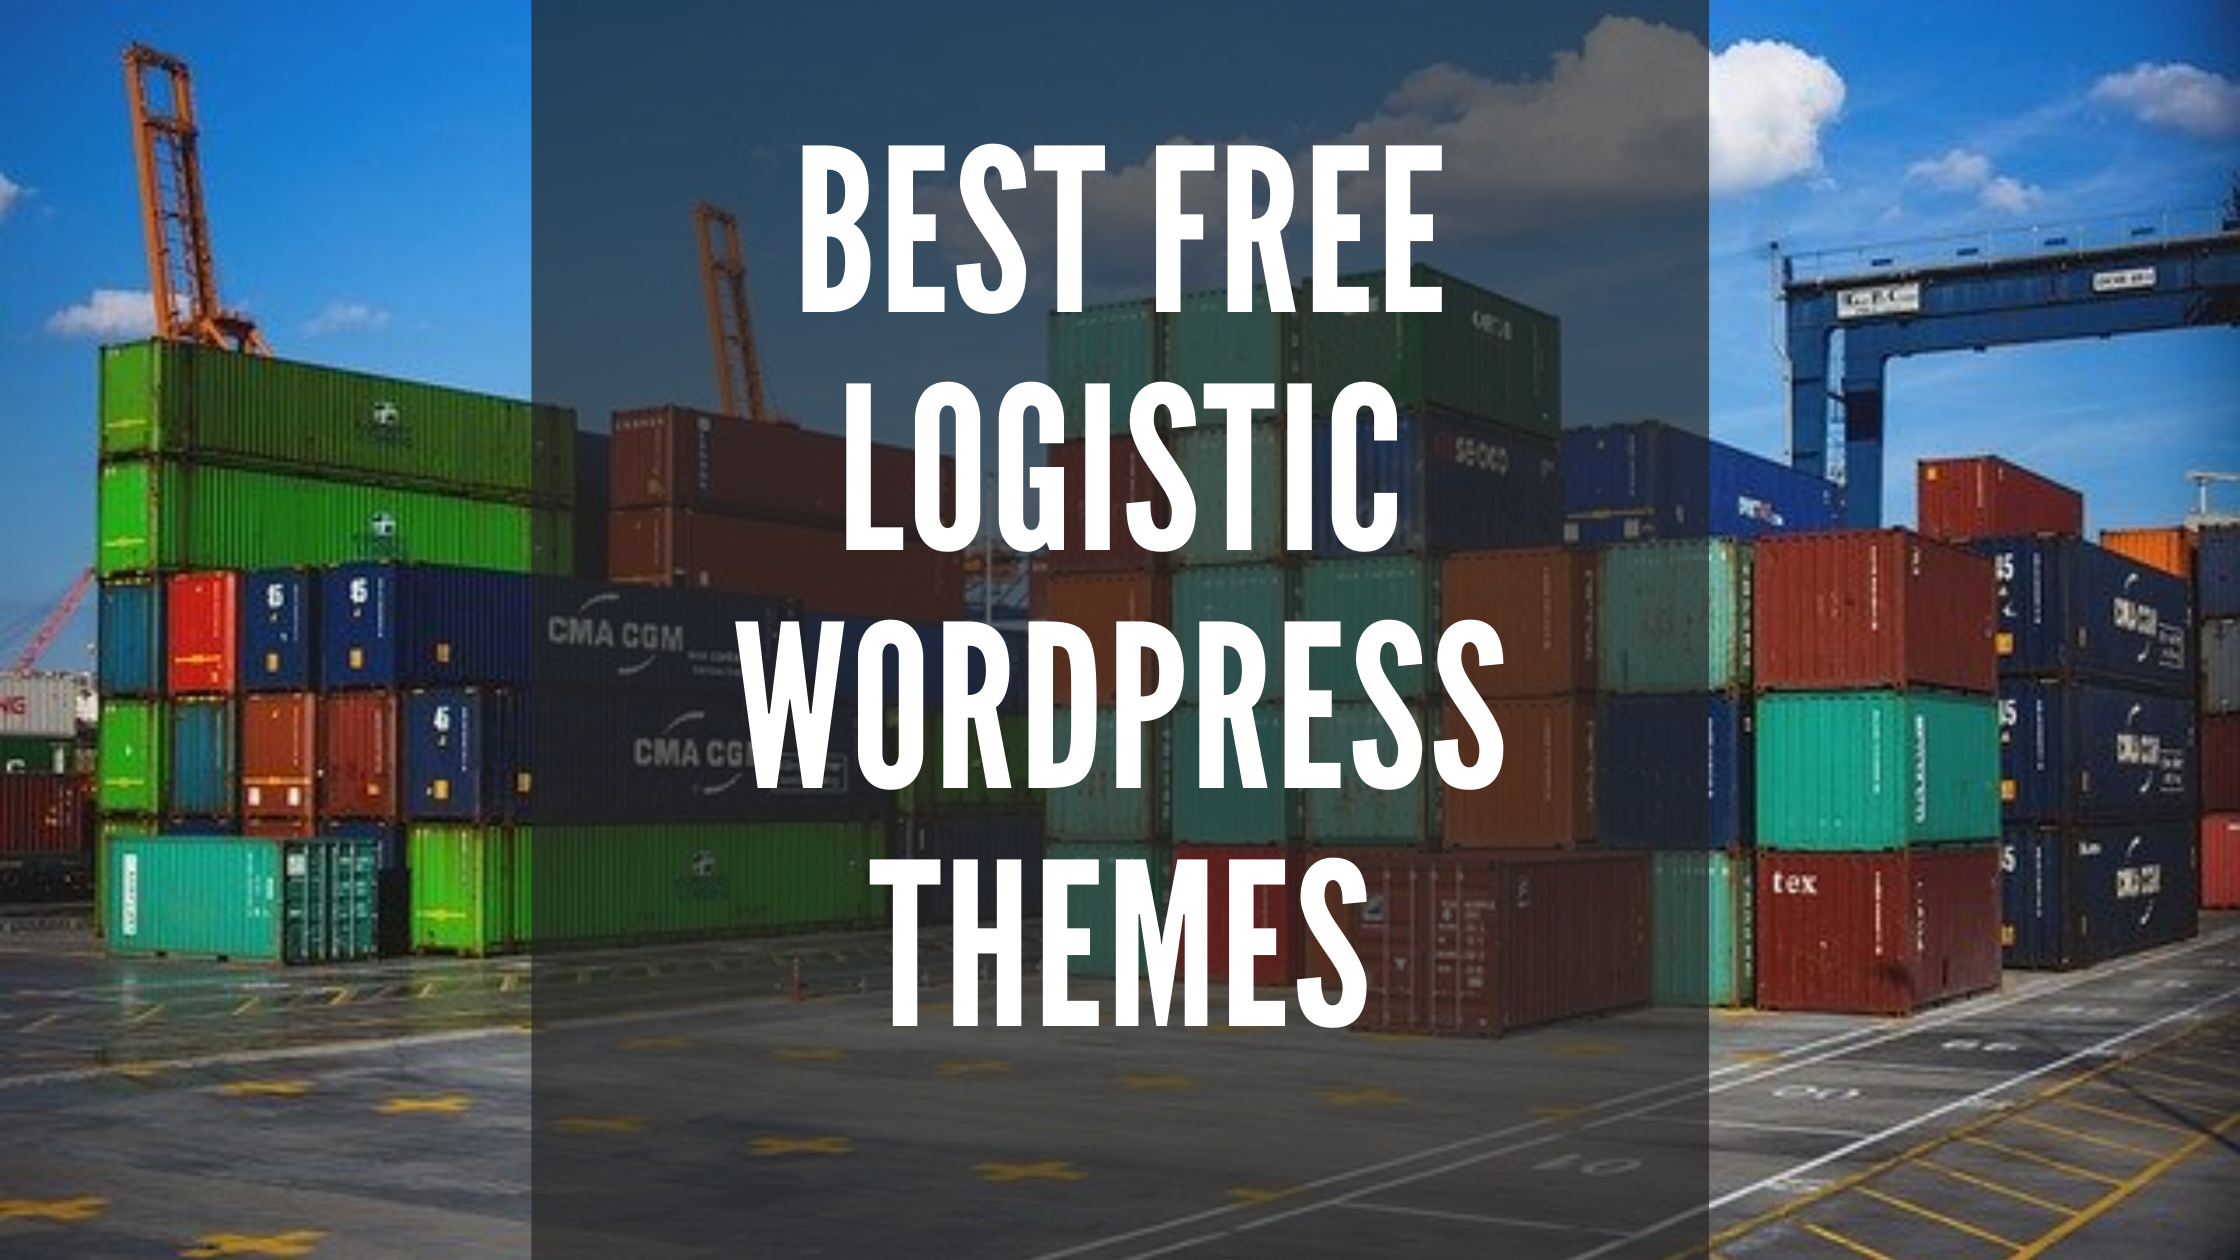 Best Free Logistic WordPress Themes For Wonderful Websites post thumbnail image